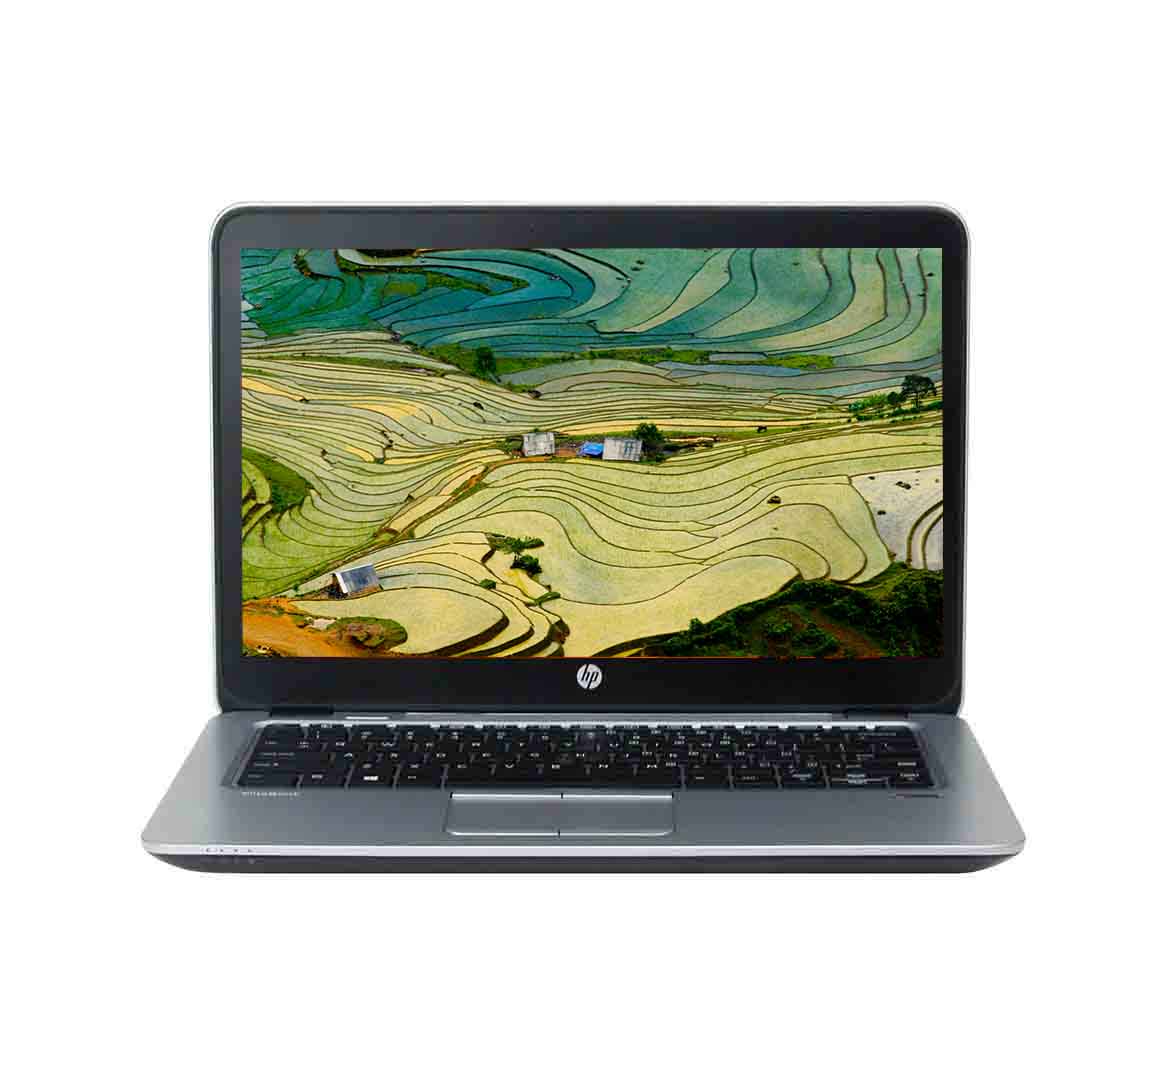 HP EliteBook 820 G3 Business Laptop, Intel Core i7-6th Generation CPU, 8GB RAM, 500GB HDD, 12.5 inch Display, Windows 10 Pro